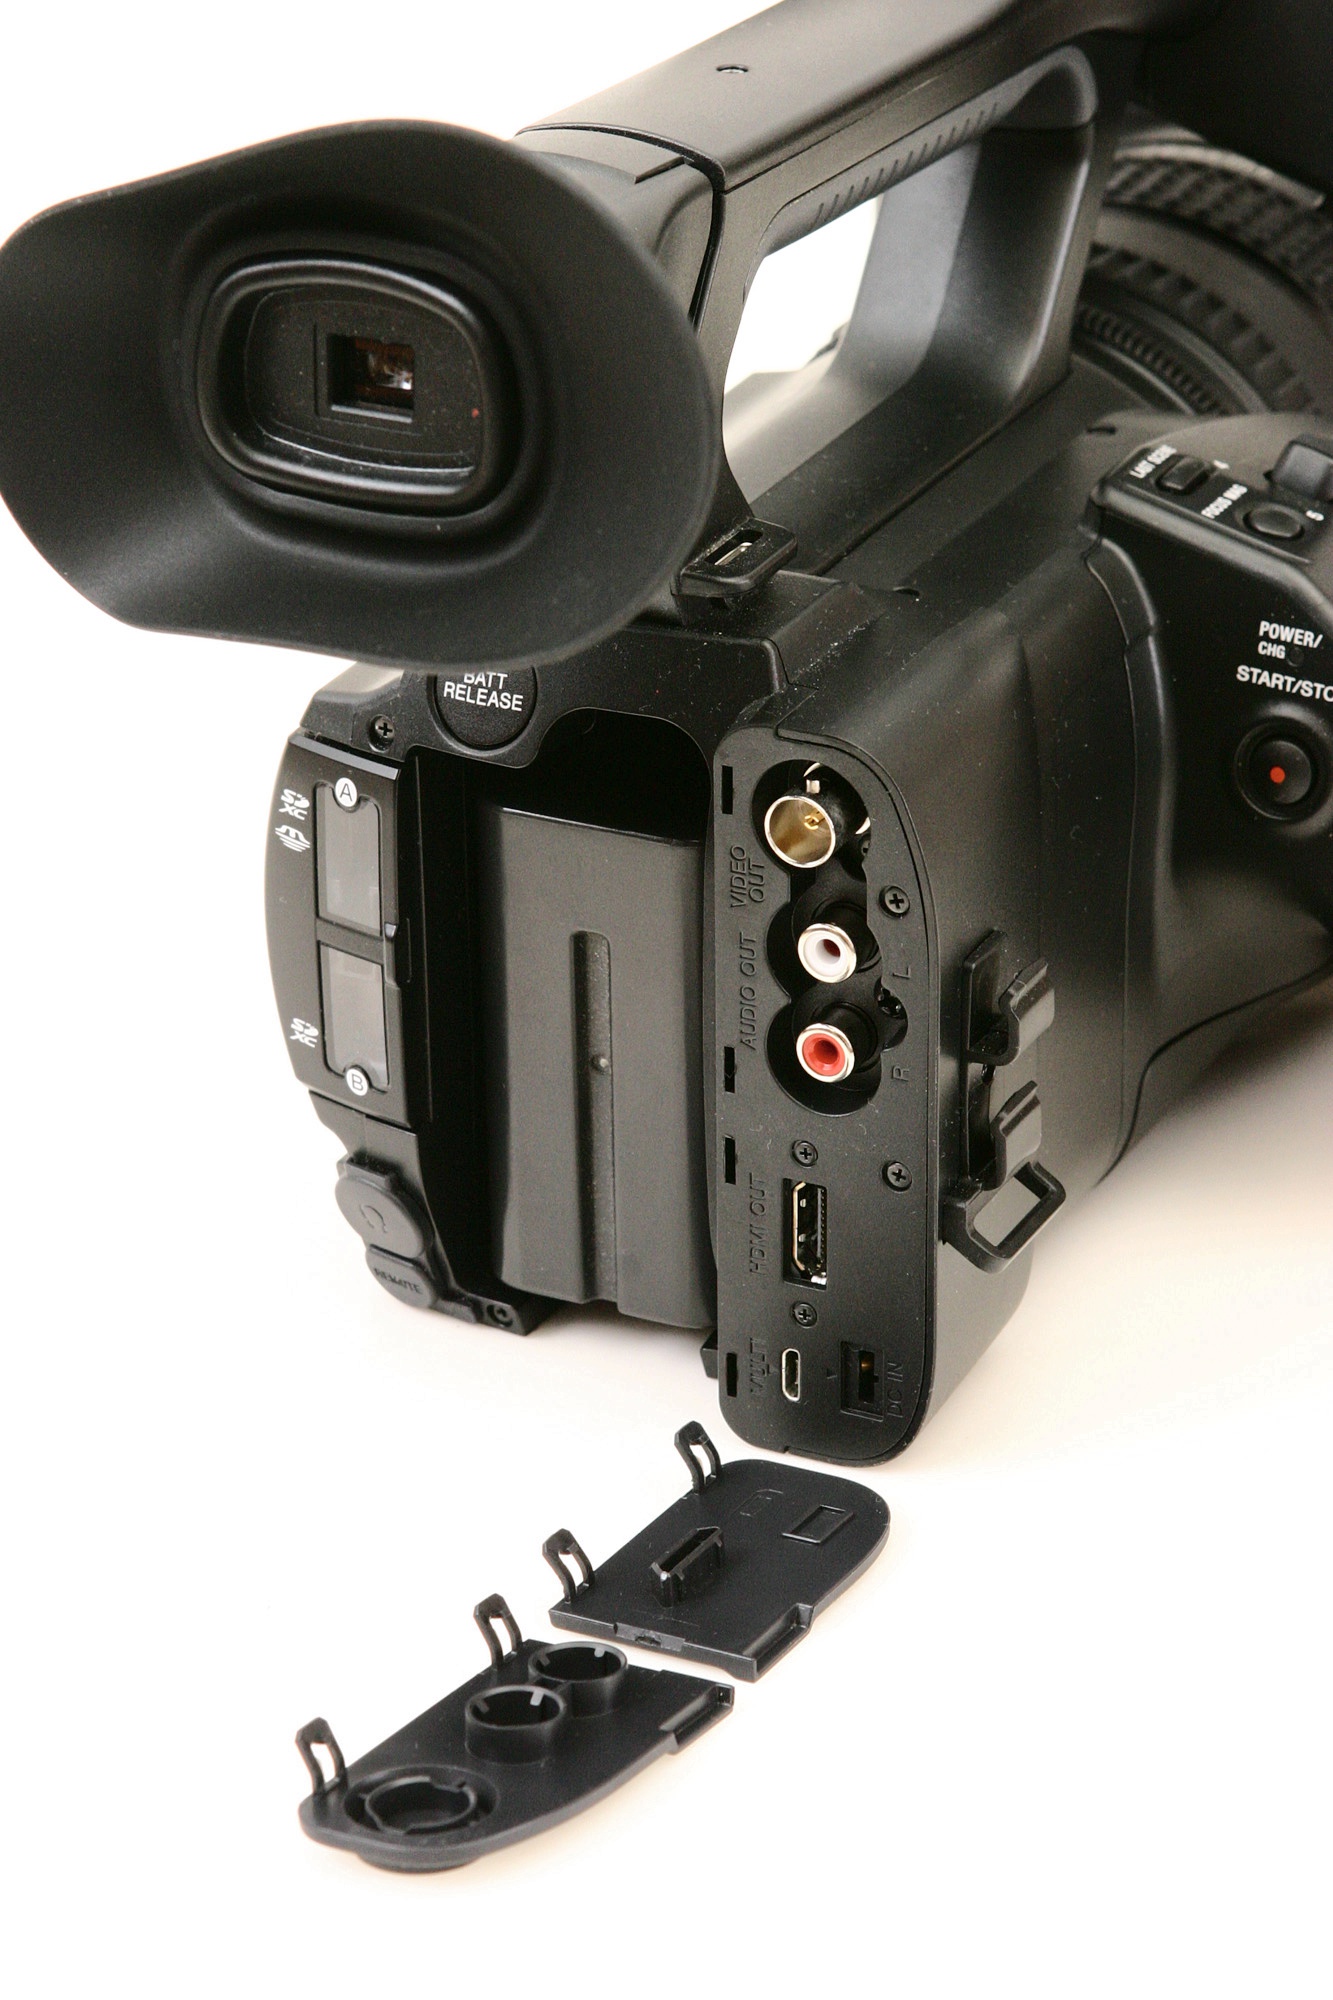 8 мп фронтальная камера качество фото